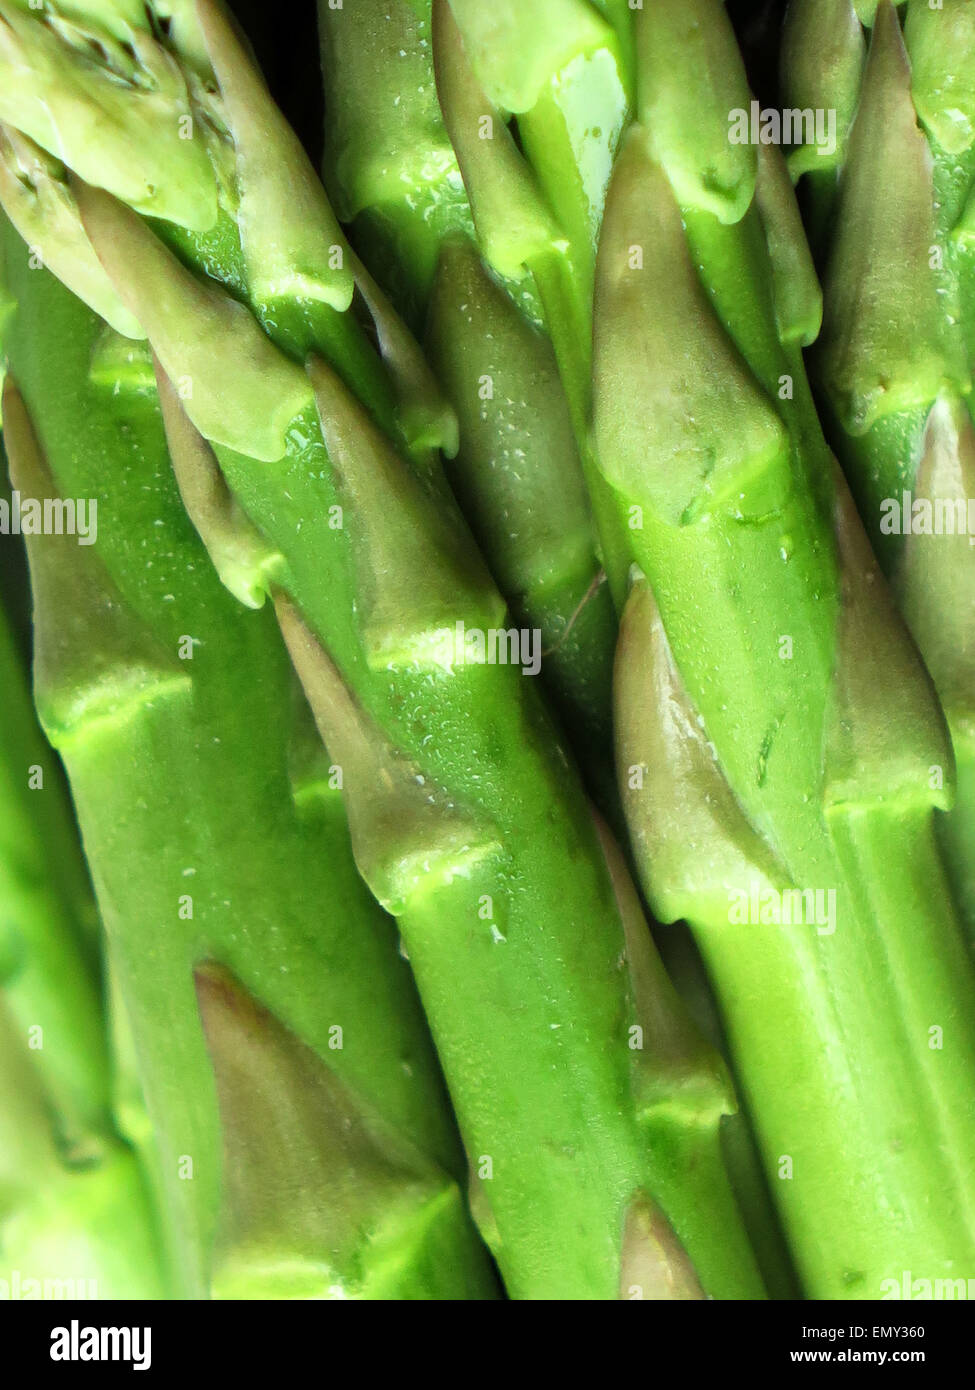 Fresh, green asparagus close-up Stock Photo